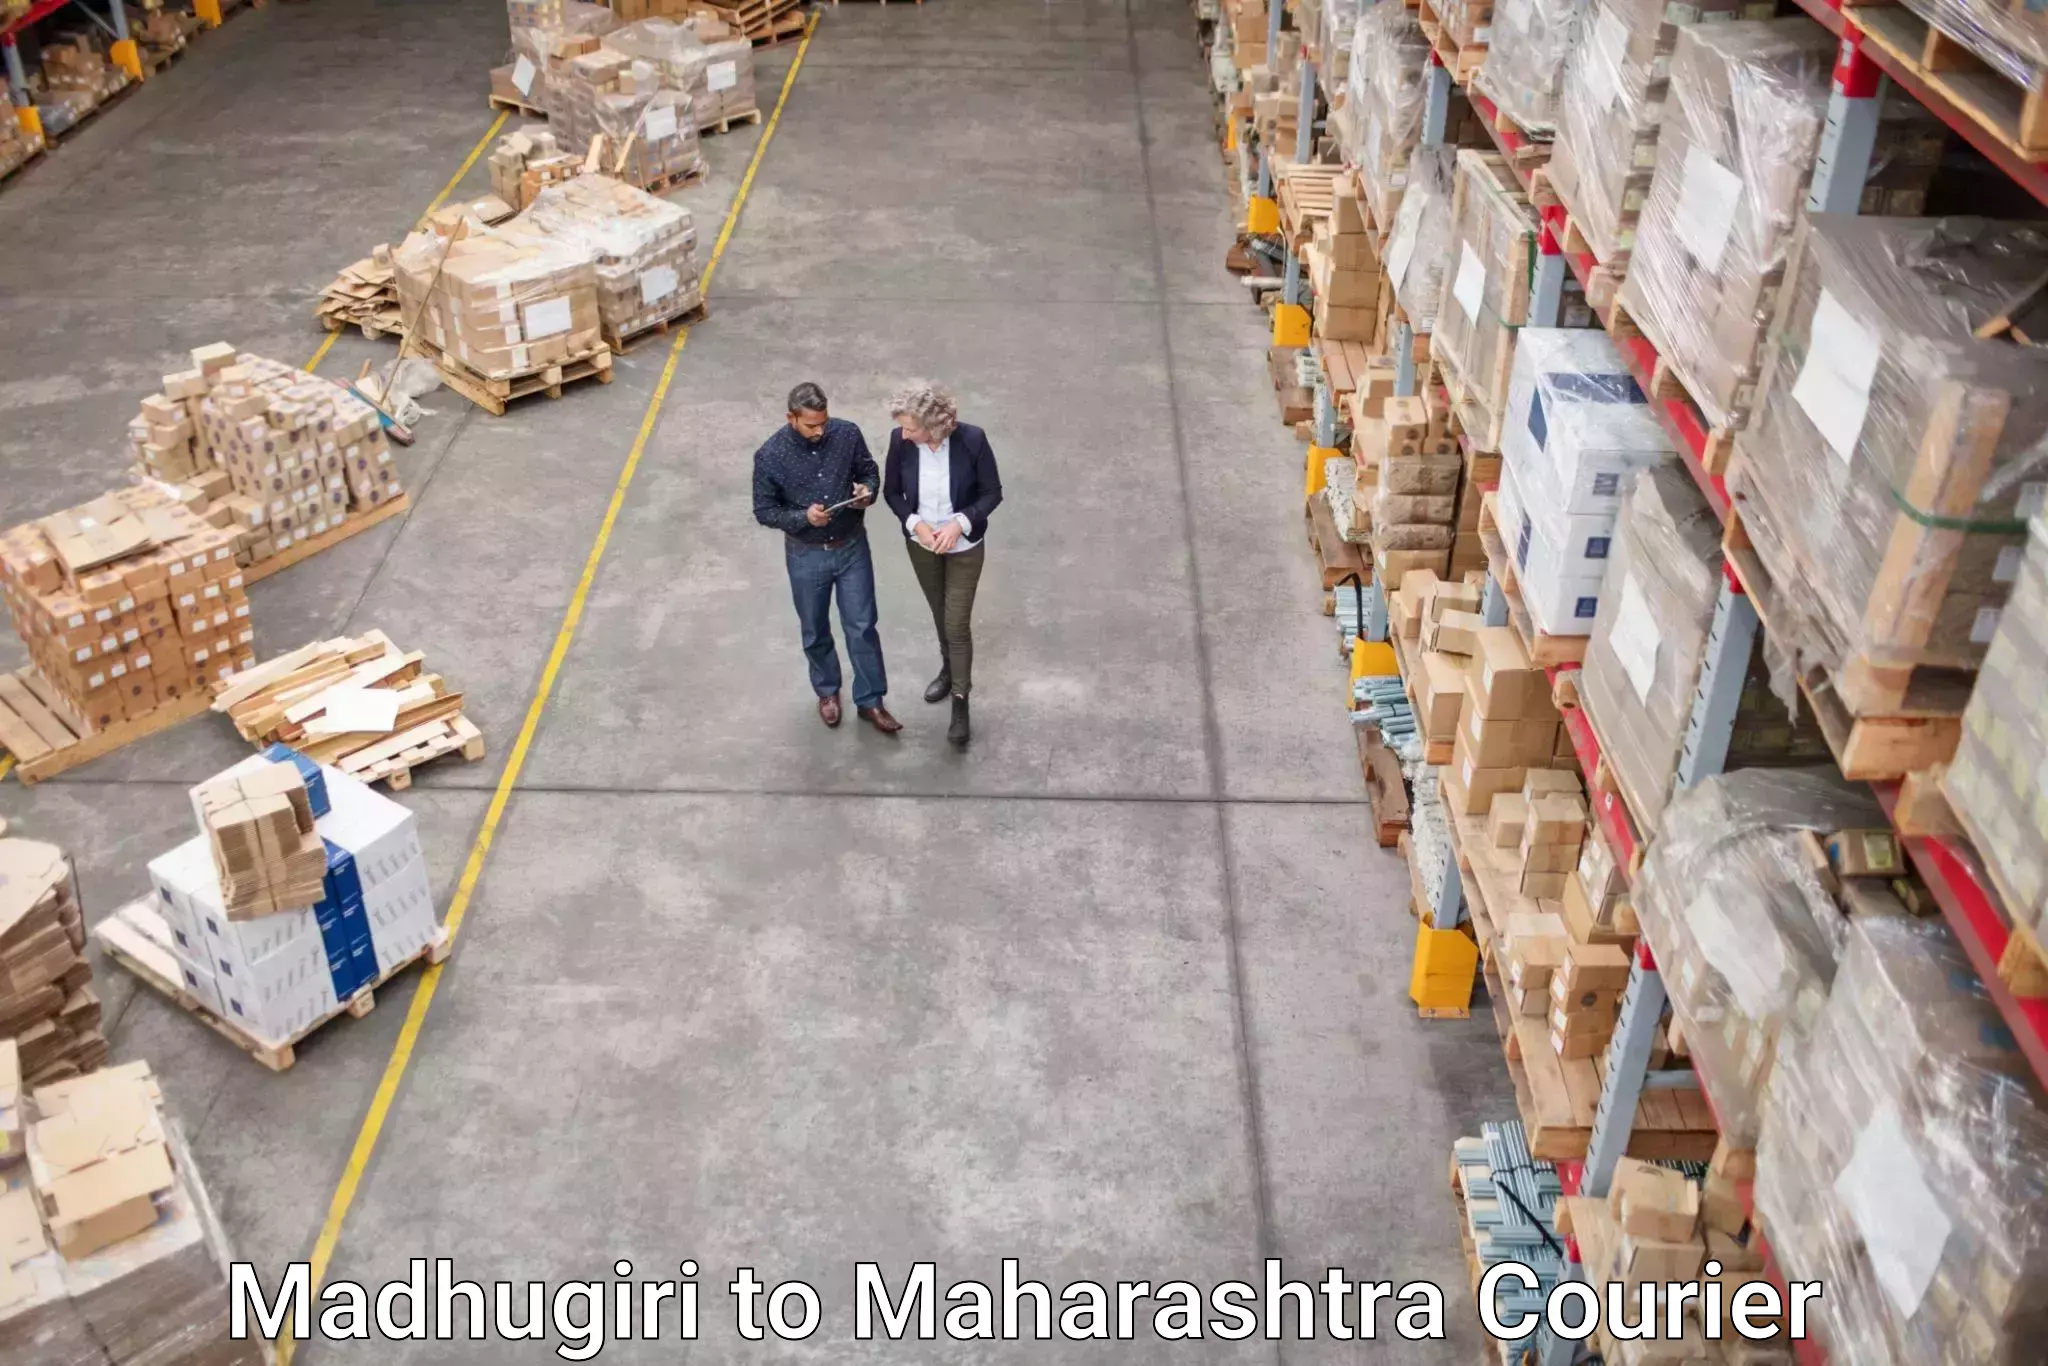 Multi-service courier options in Madhugiri to Nandurbar